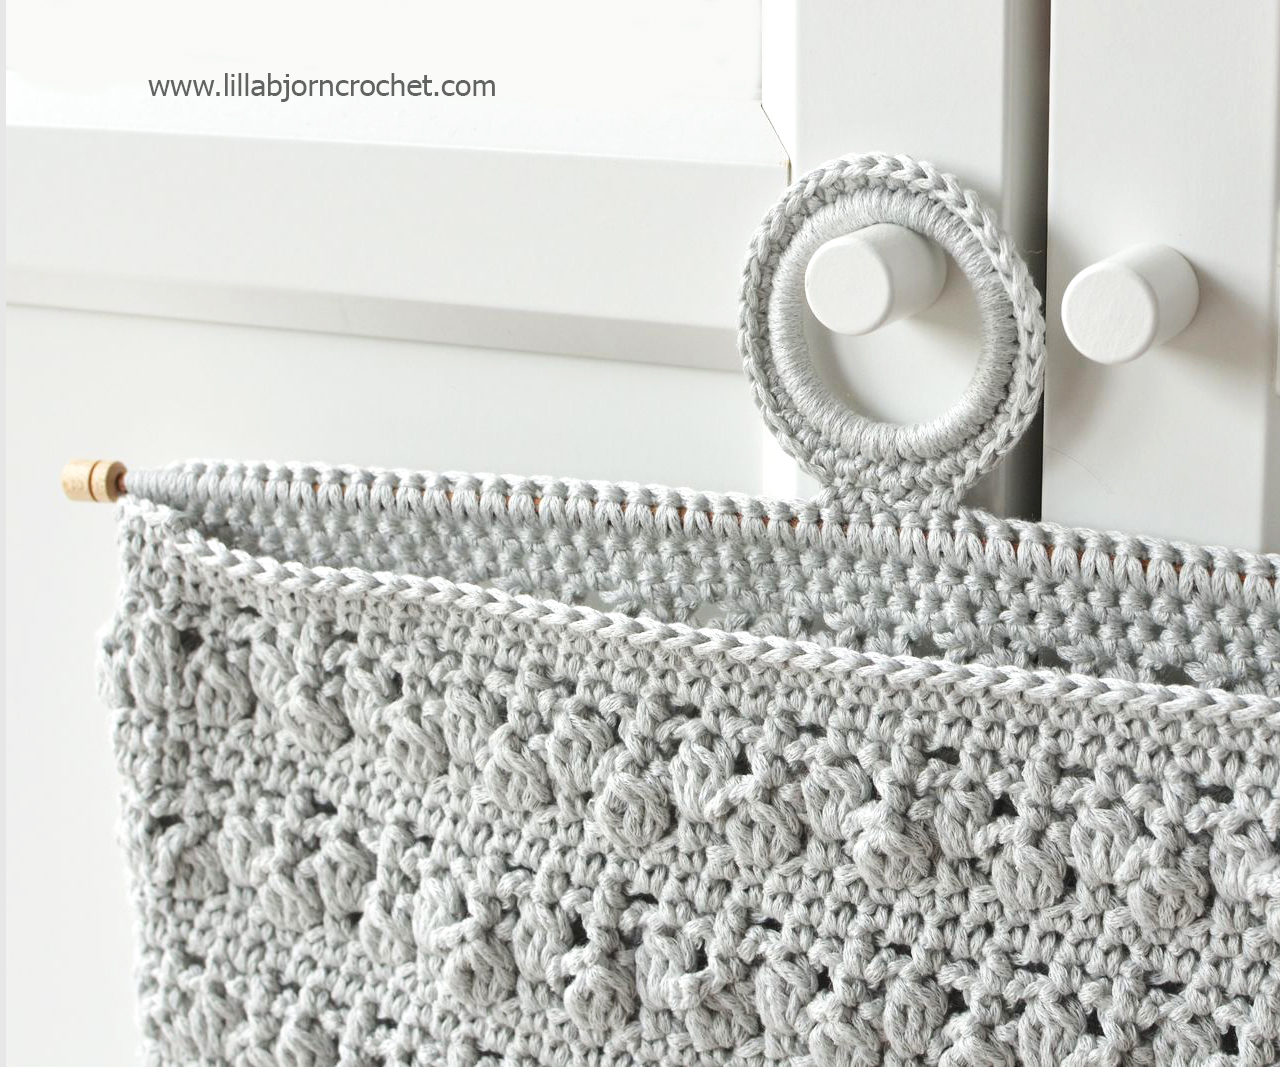 Crocheted Bathroom Organizer - a unique and stylish accessory for every bathroom. Designed by Lilla Bjorn Crochet